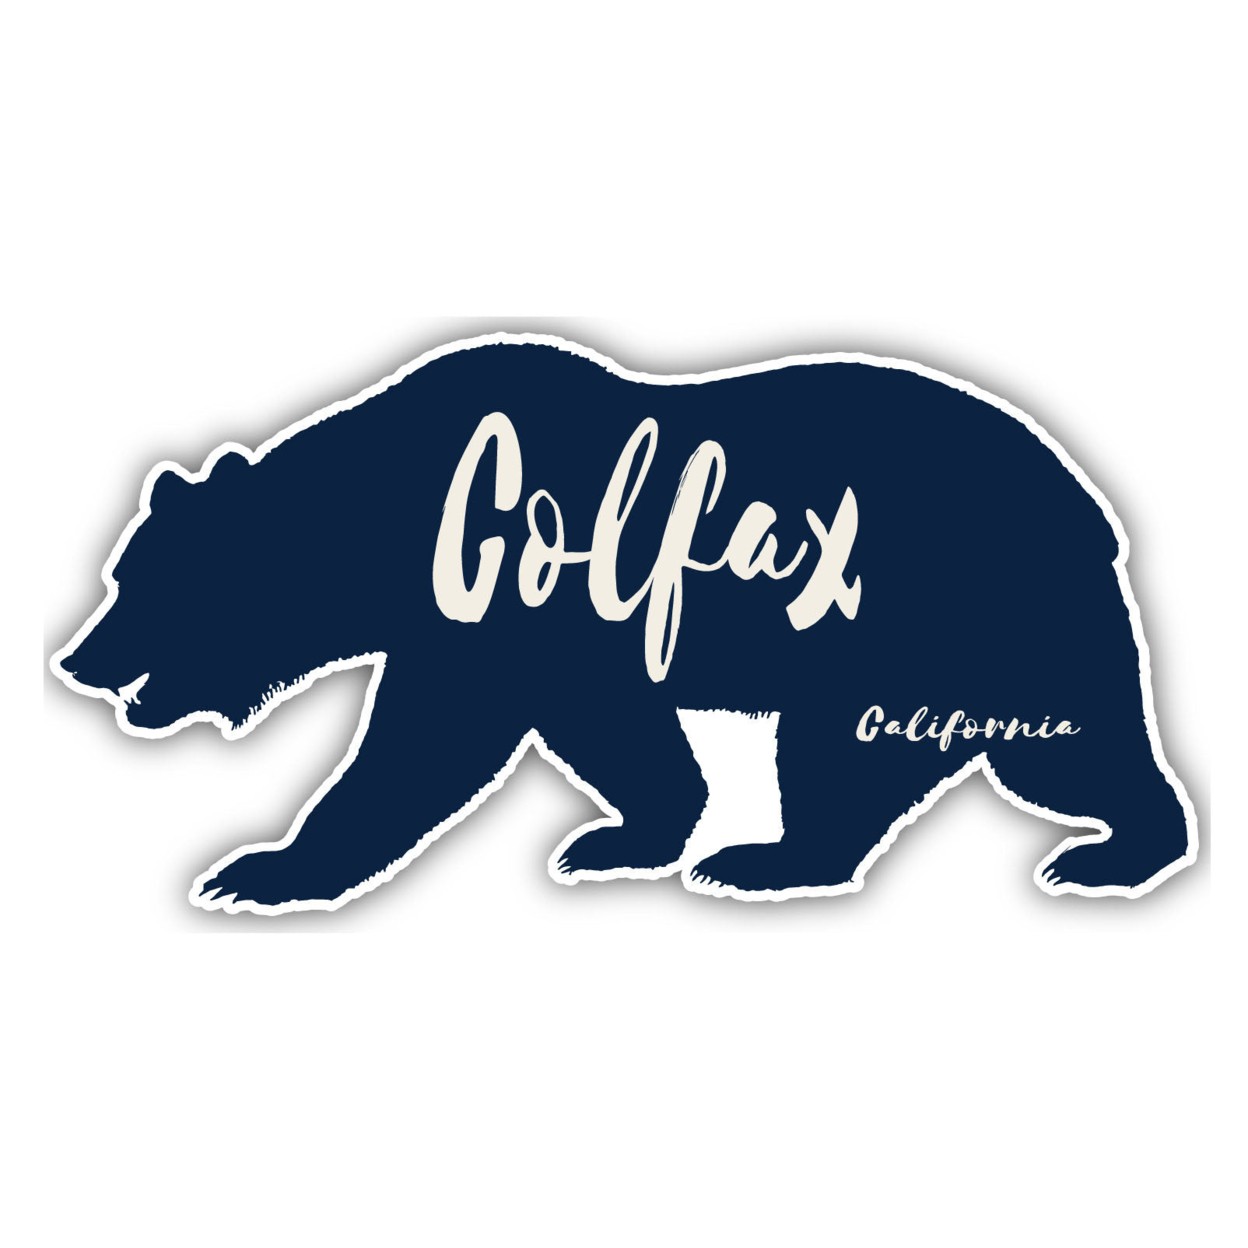 Colfax California Souvenir Decorative Stickers (Choose Theme And Size) - Single Unit, 10-Inch, Bear